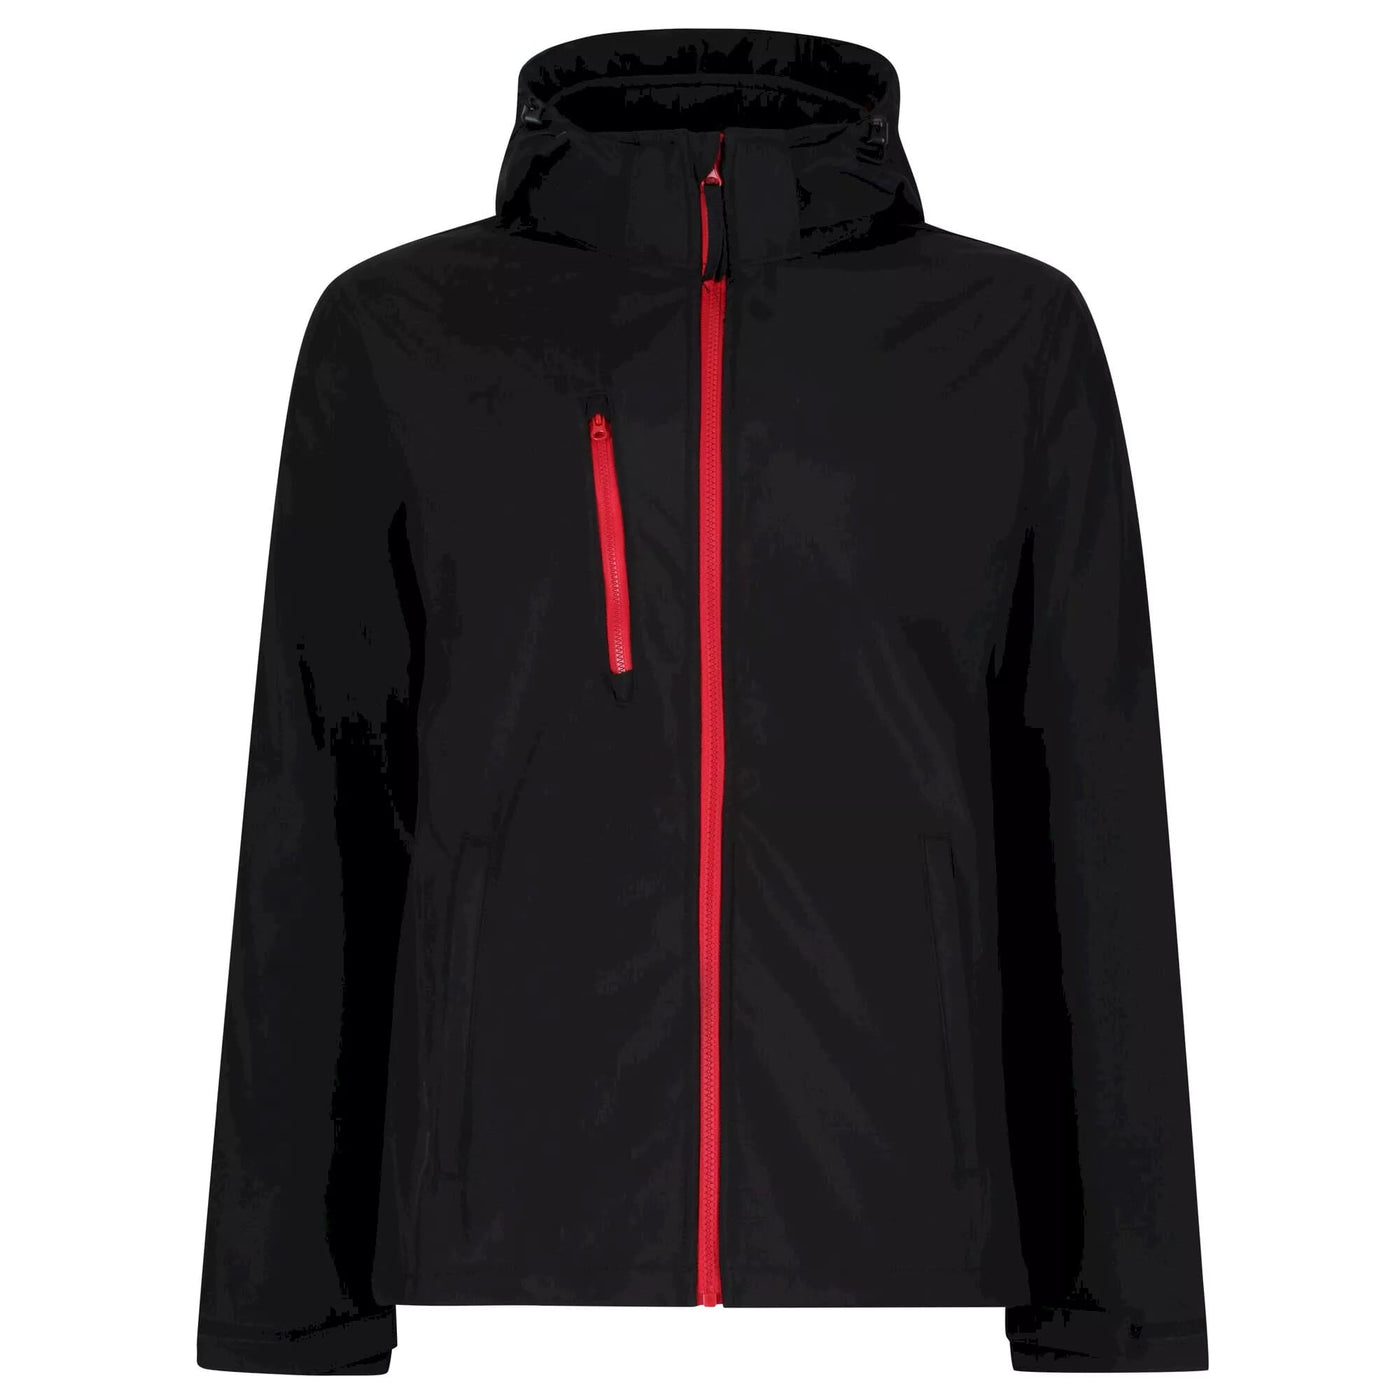 Regatta Venturer 3 Layer Jacket, Black/Classic Red